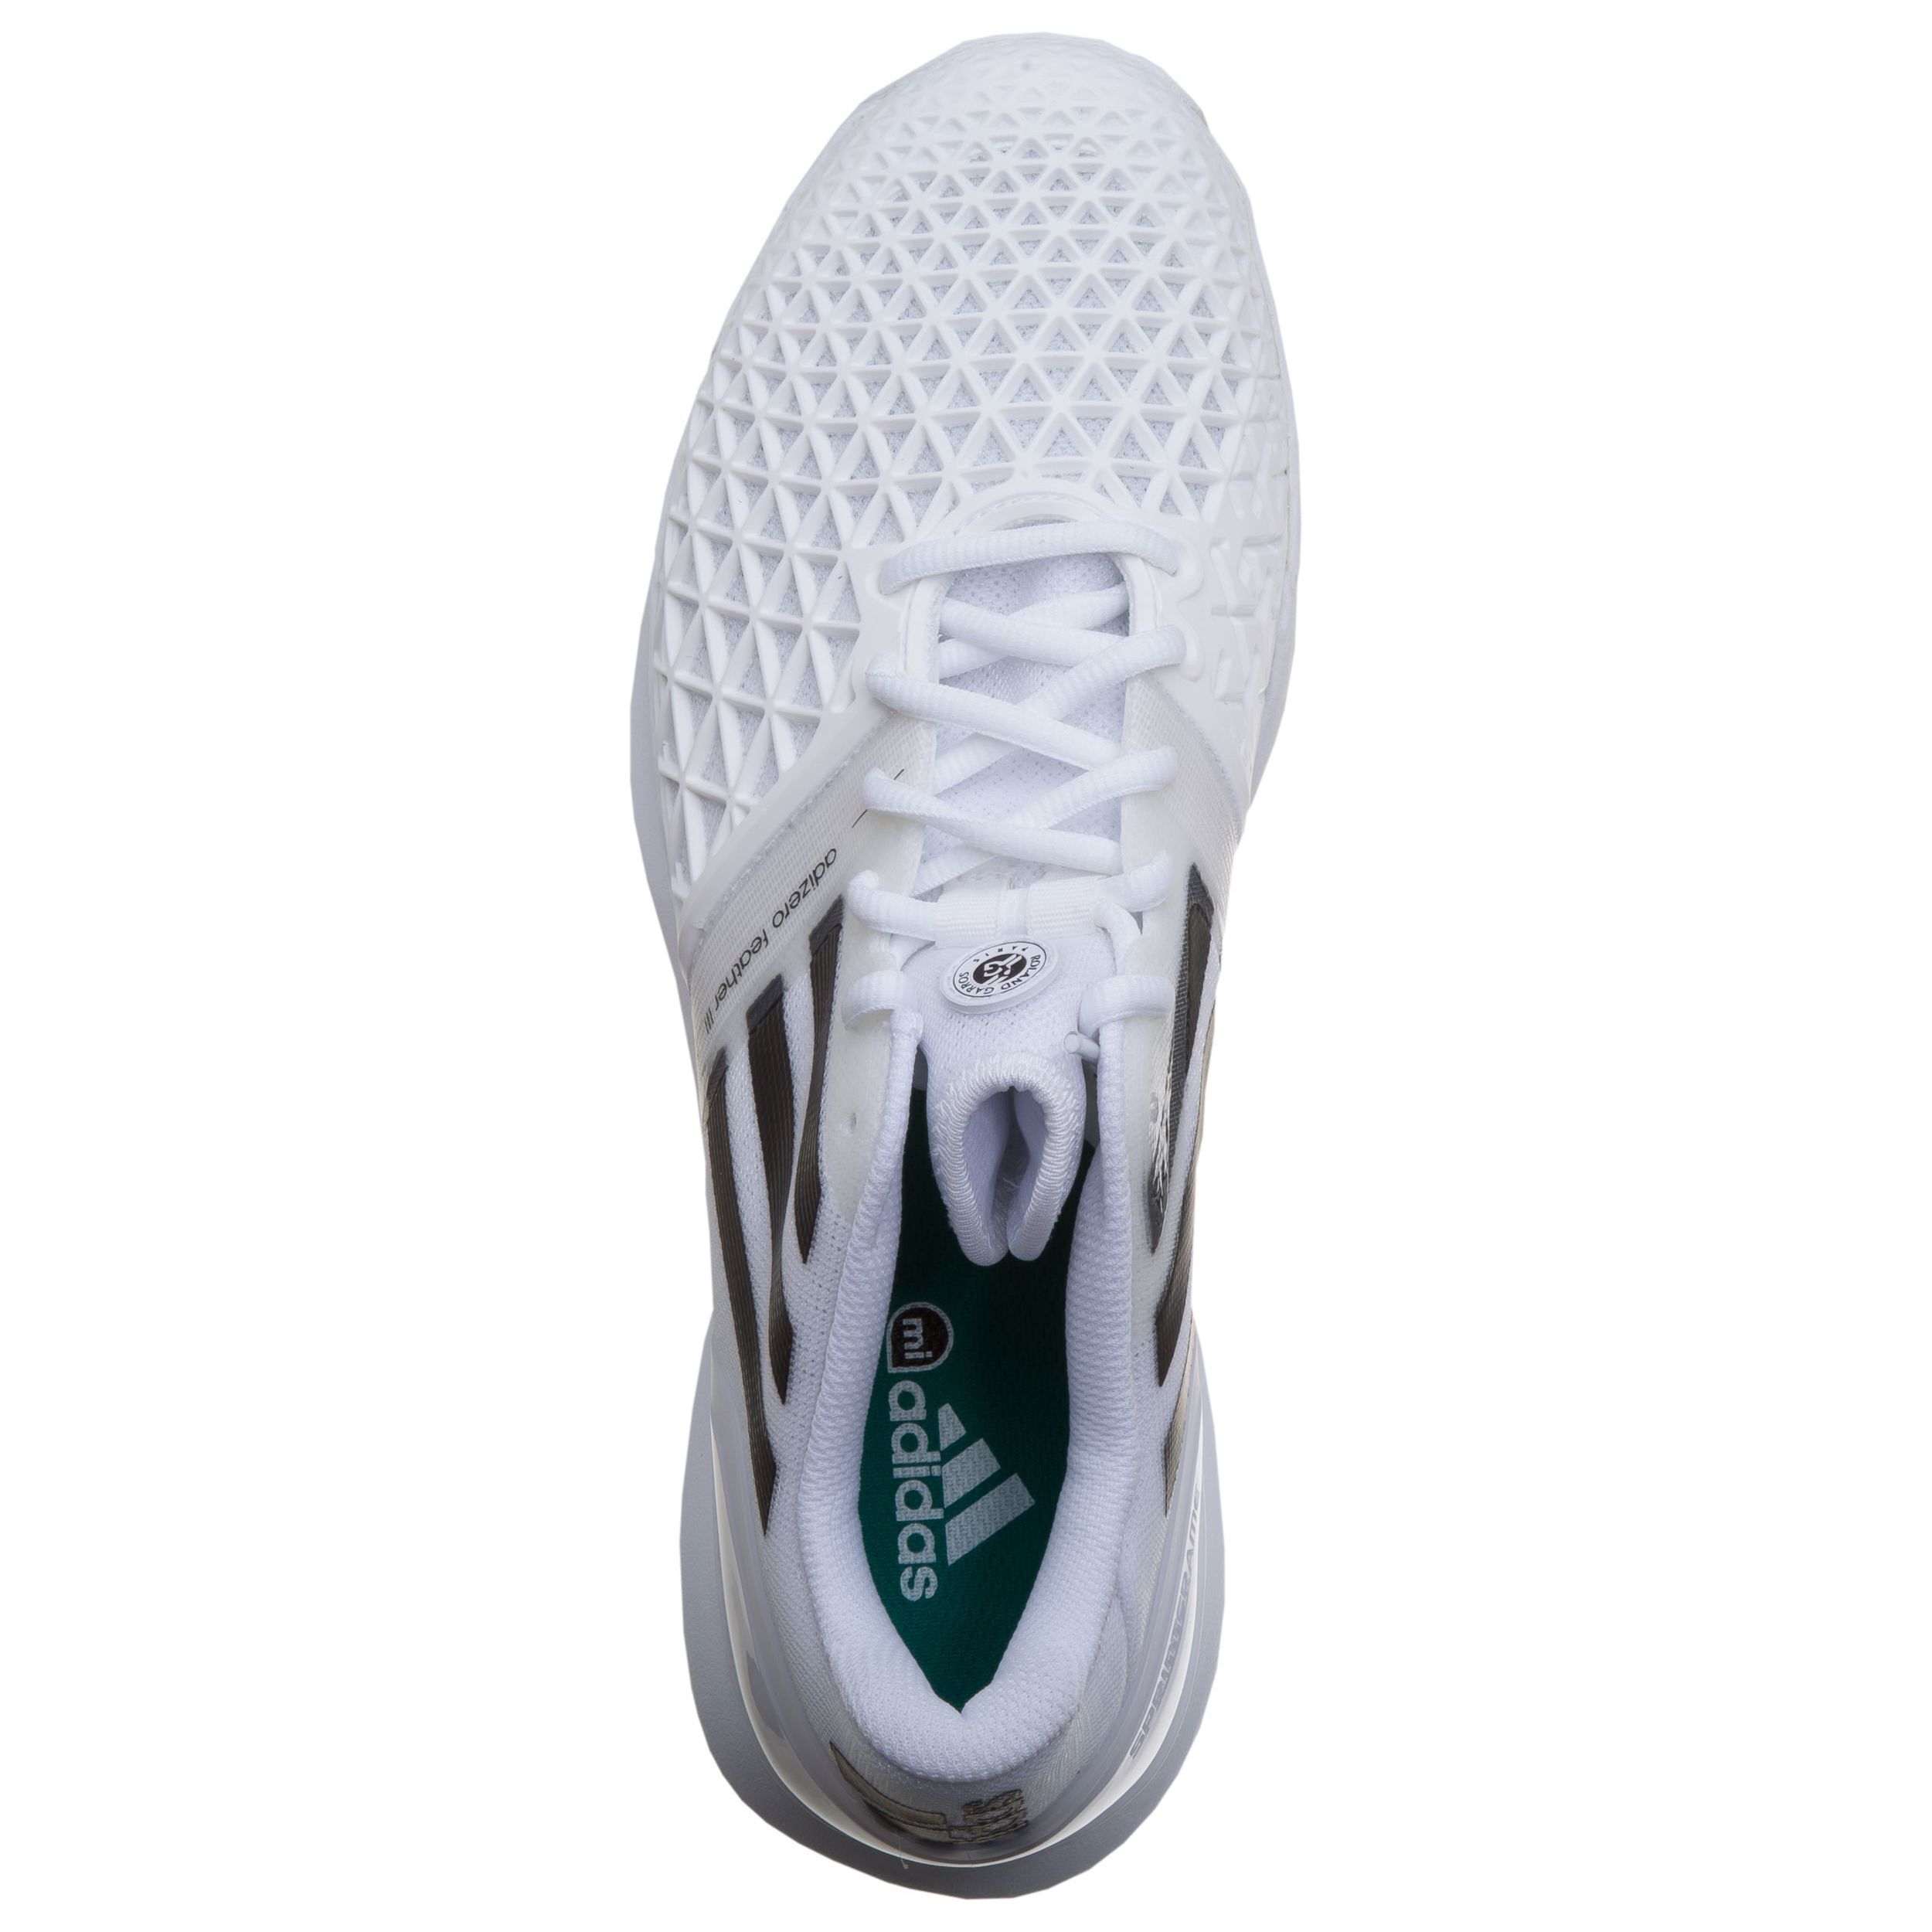 adidas climacool adizero feather 3 mens tennis shoes